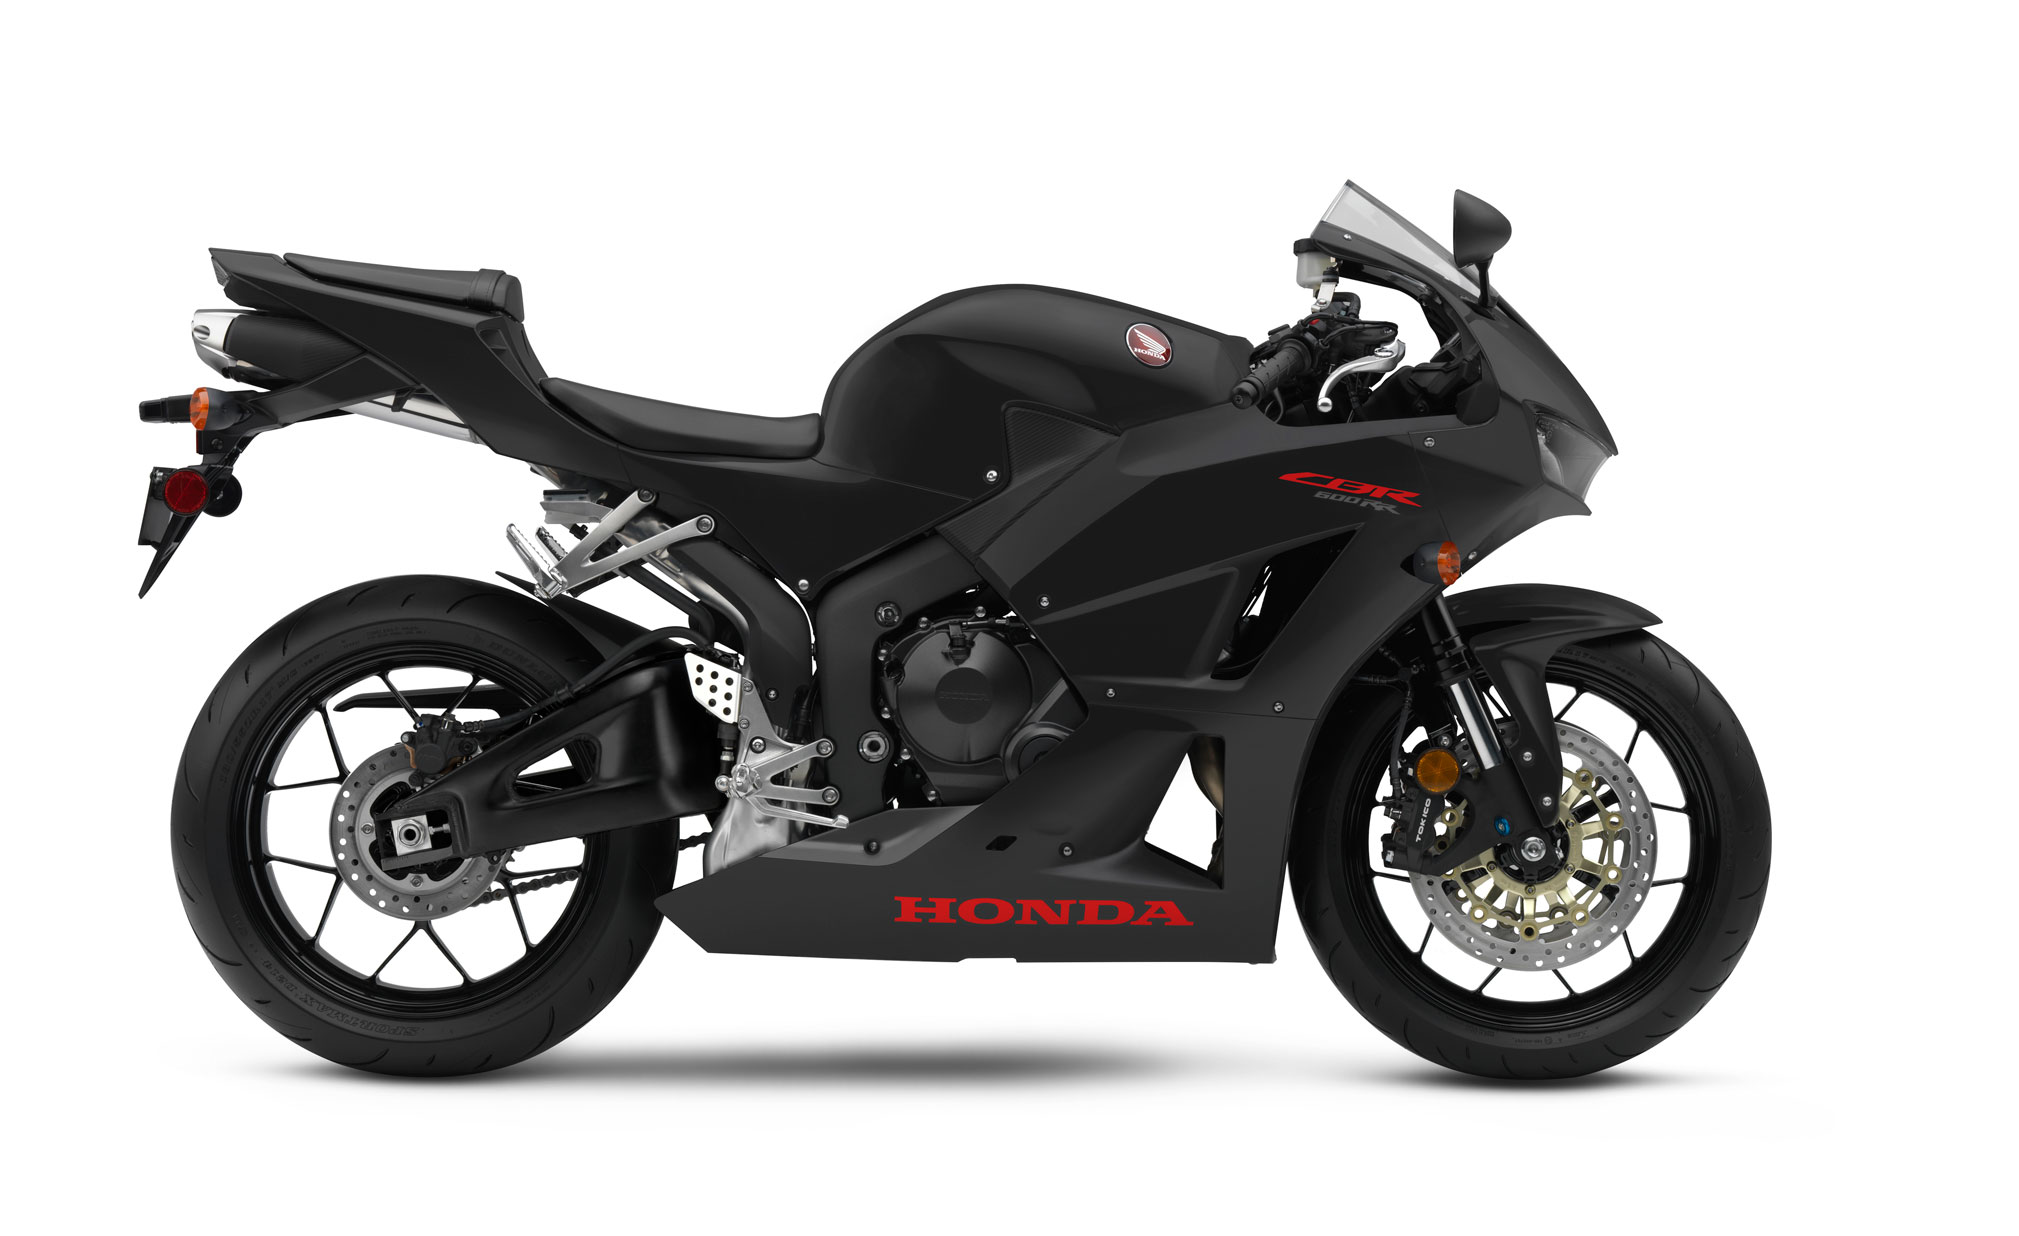 Honda Cbr 600 Rr 2019 | Best Motorcycle 2020